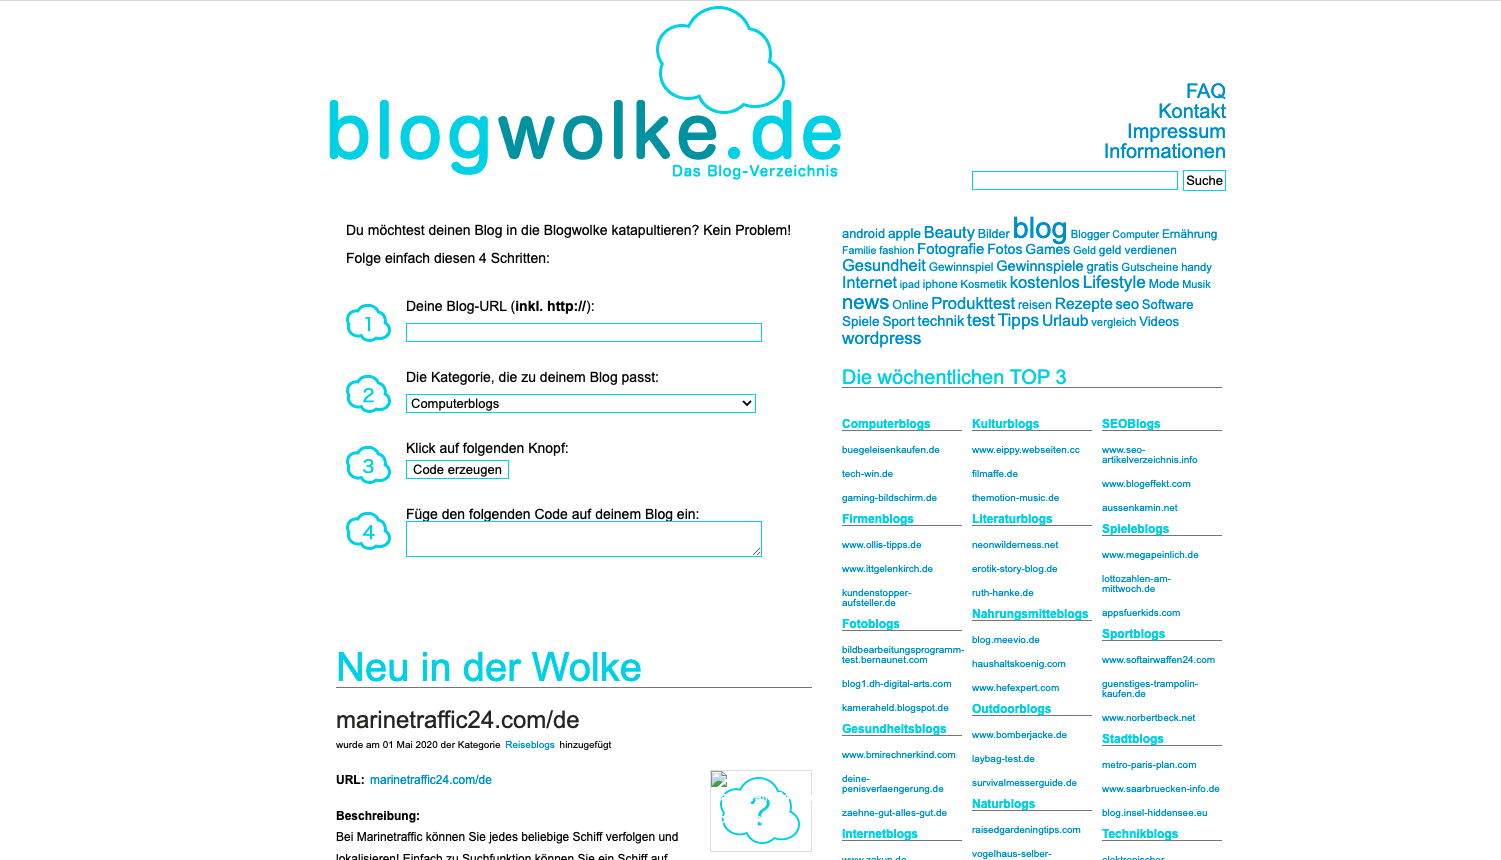 Blogwolke.de - das Blog-Verzeichnis